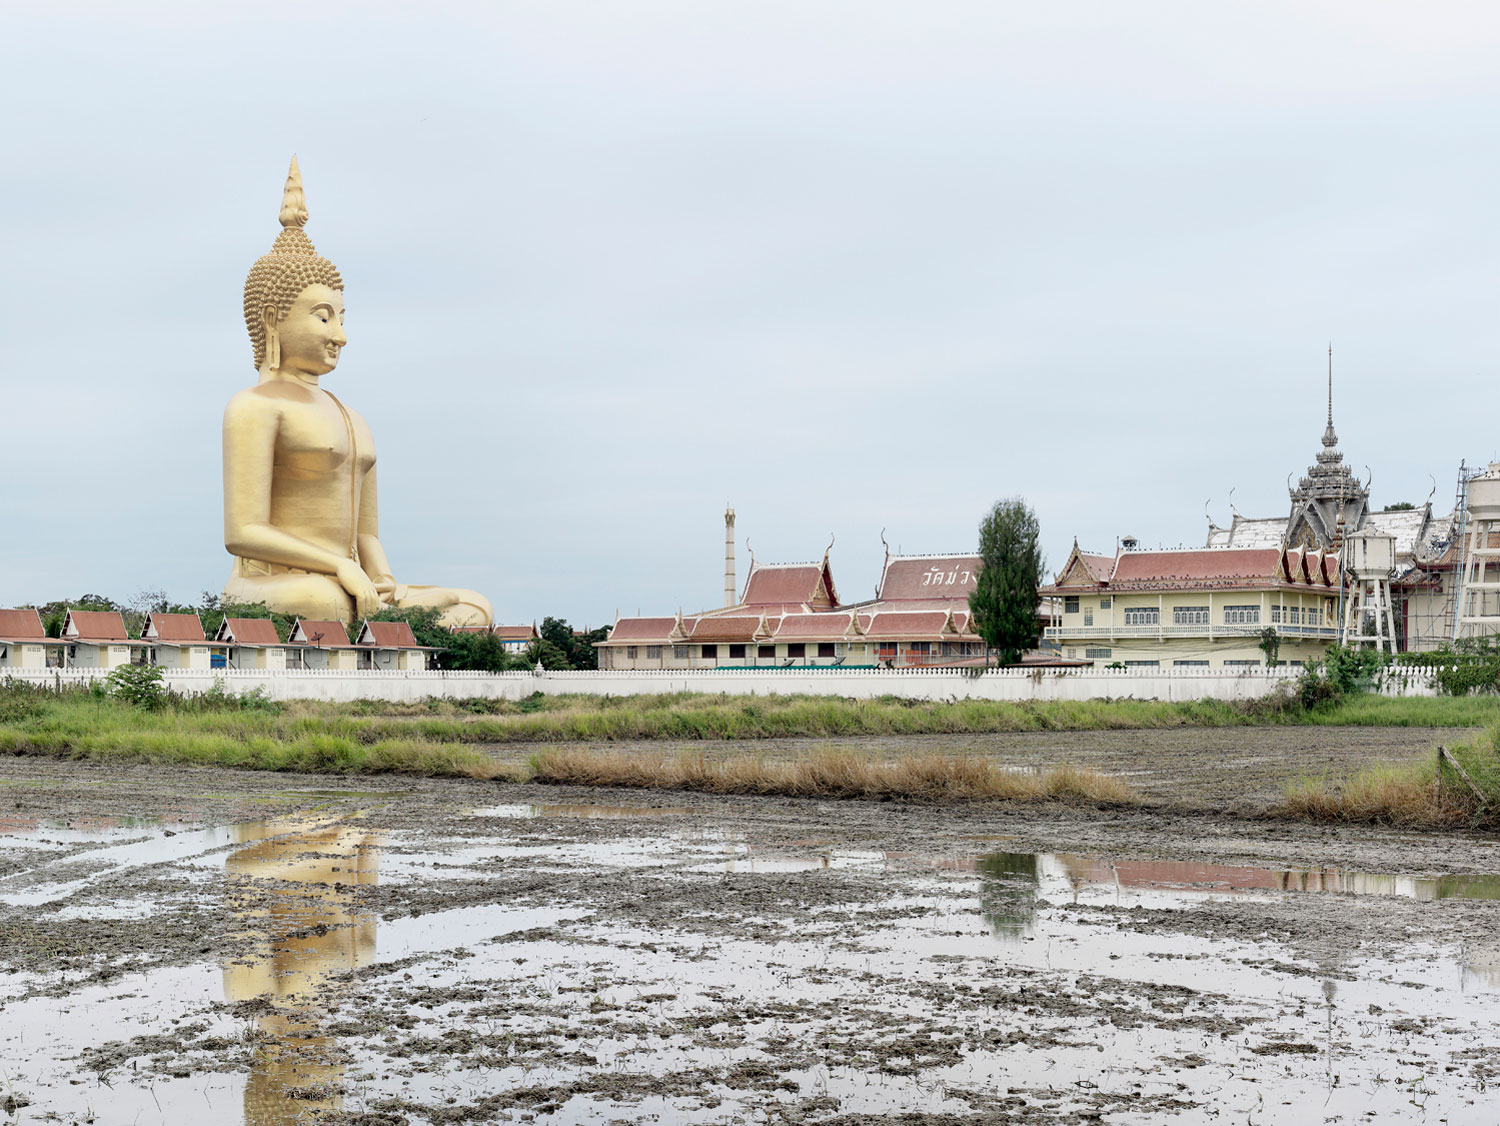 Grand Bouddha Sakayamunee, 92m (301 ft.), built in 2008. Ang Thong, Thailand.